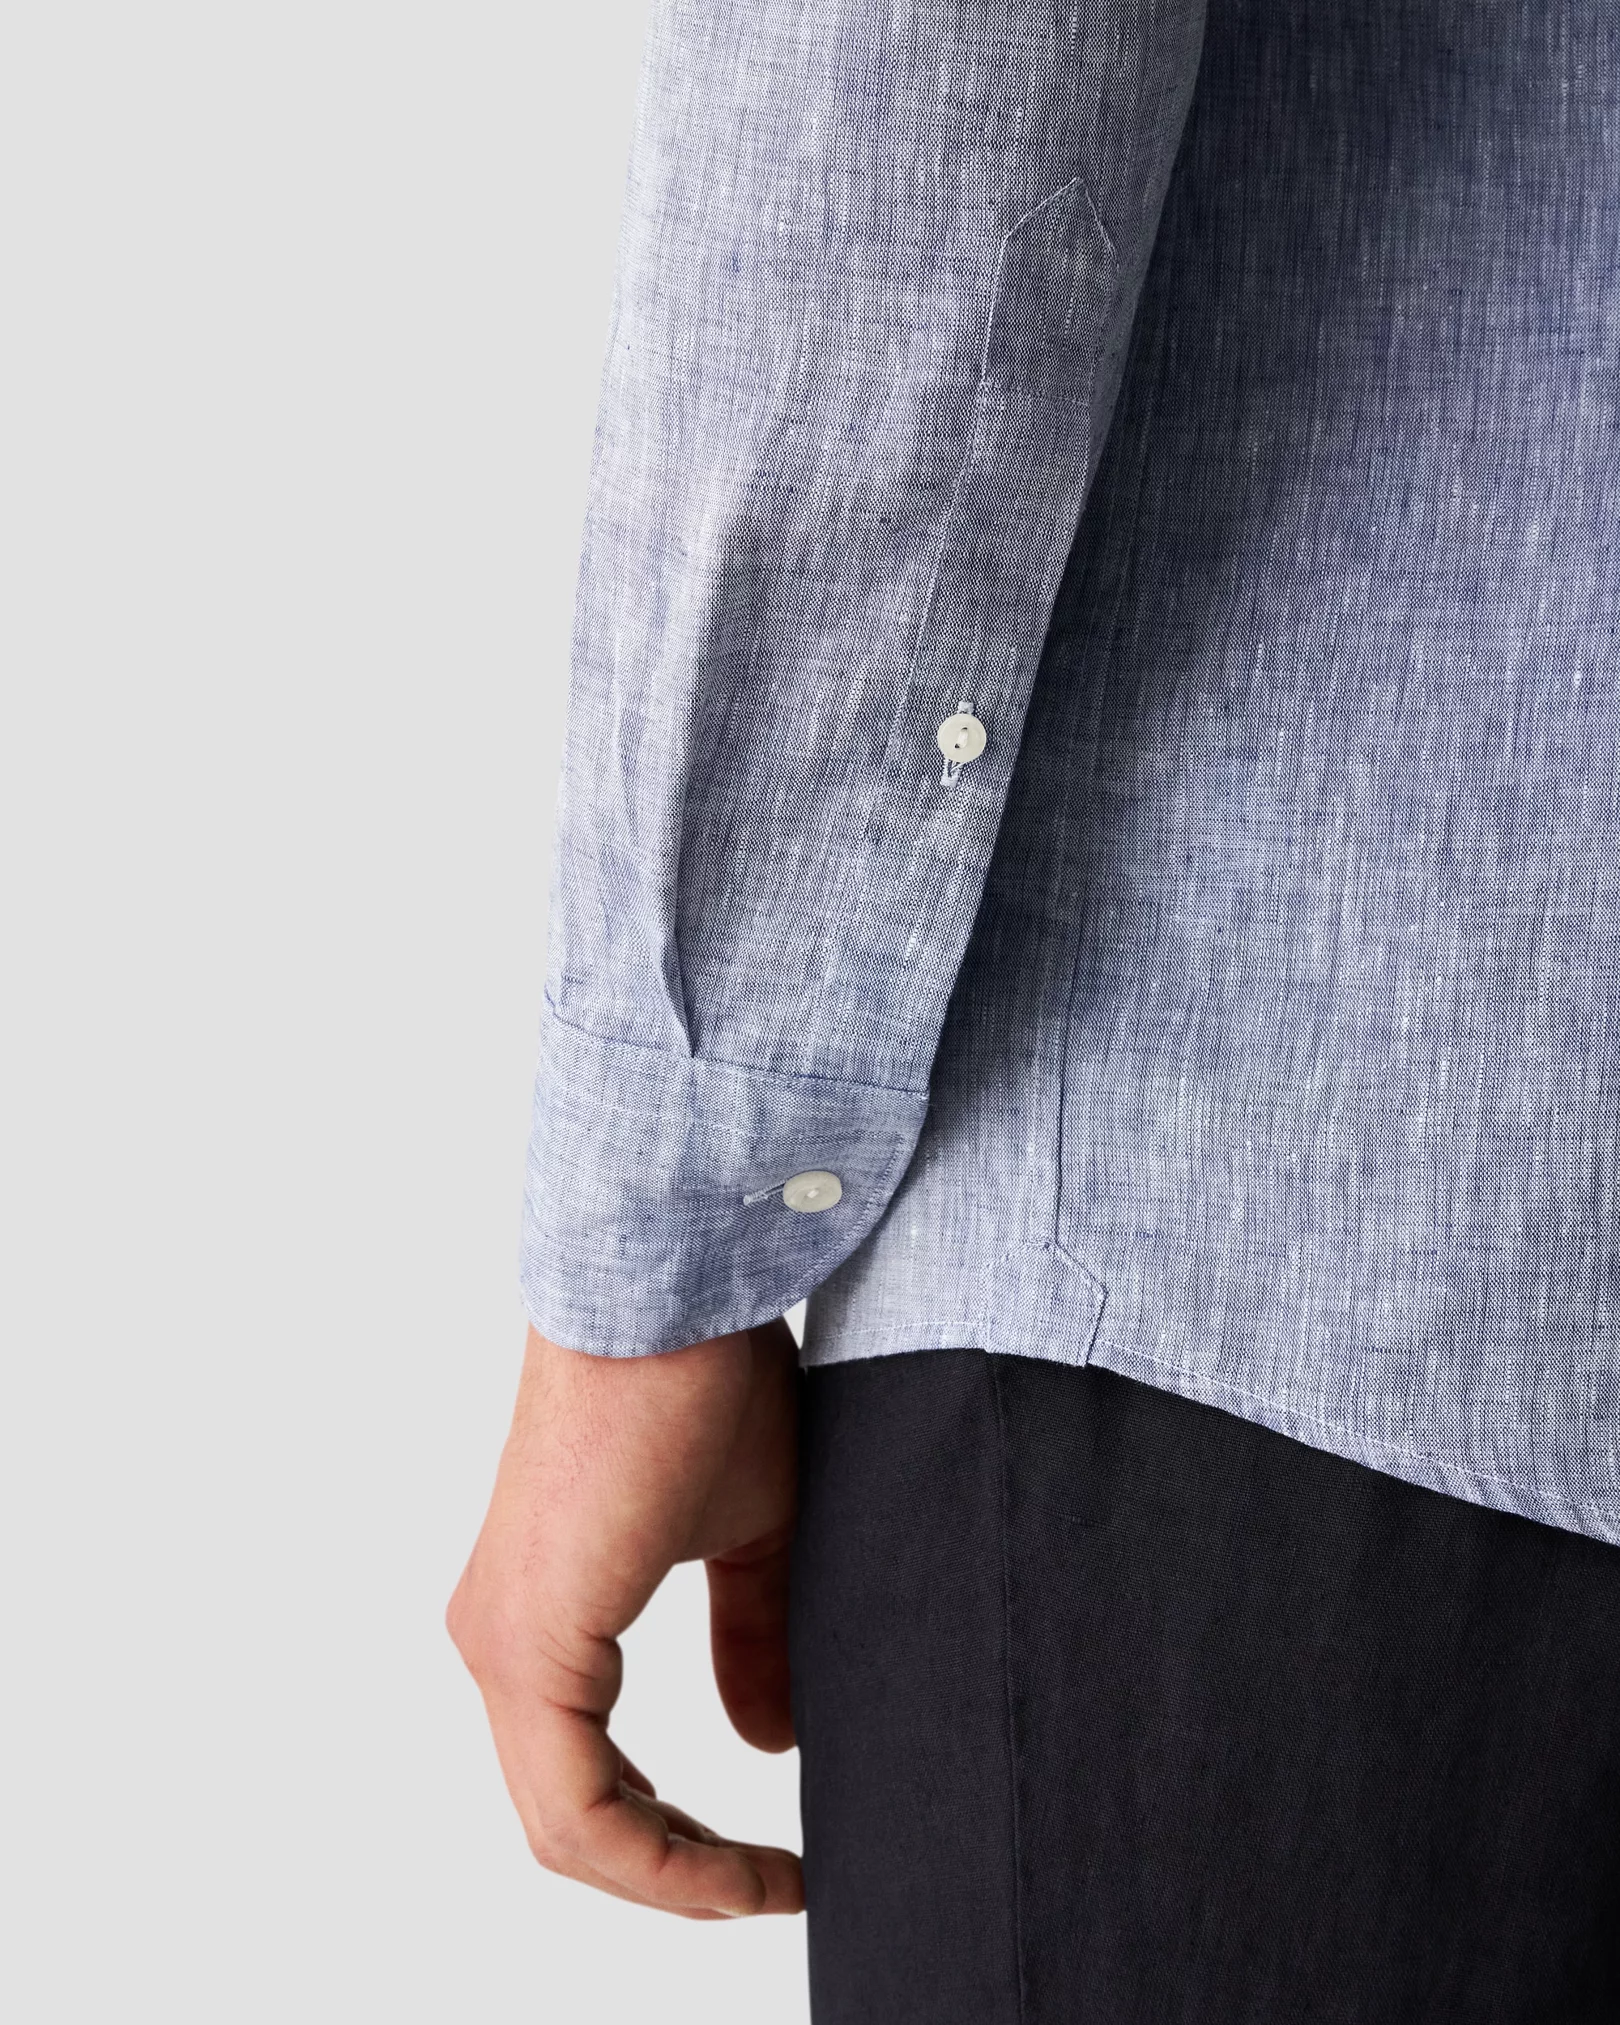 Eton - mid blue linen wide spread linen shirt